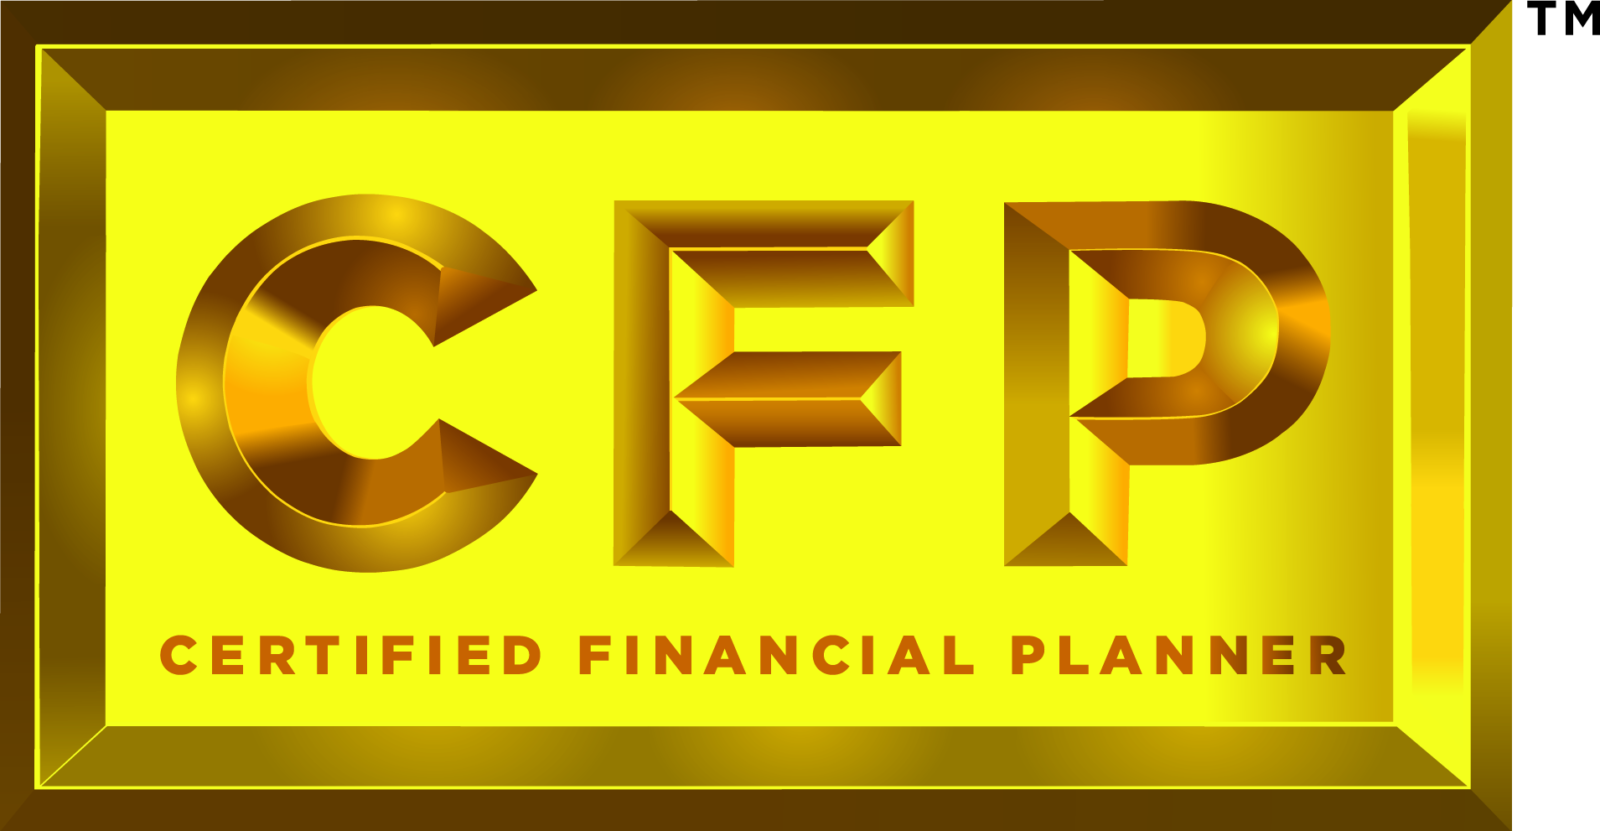 Cfp Logo